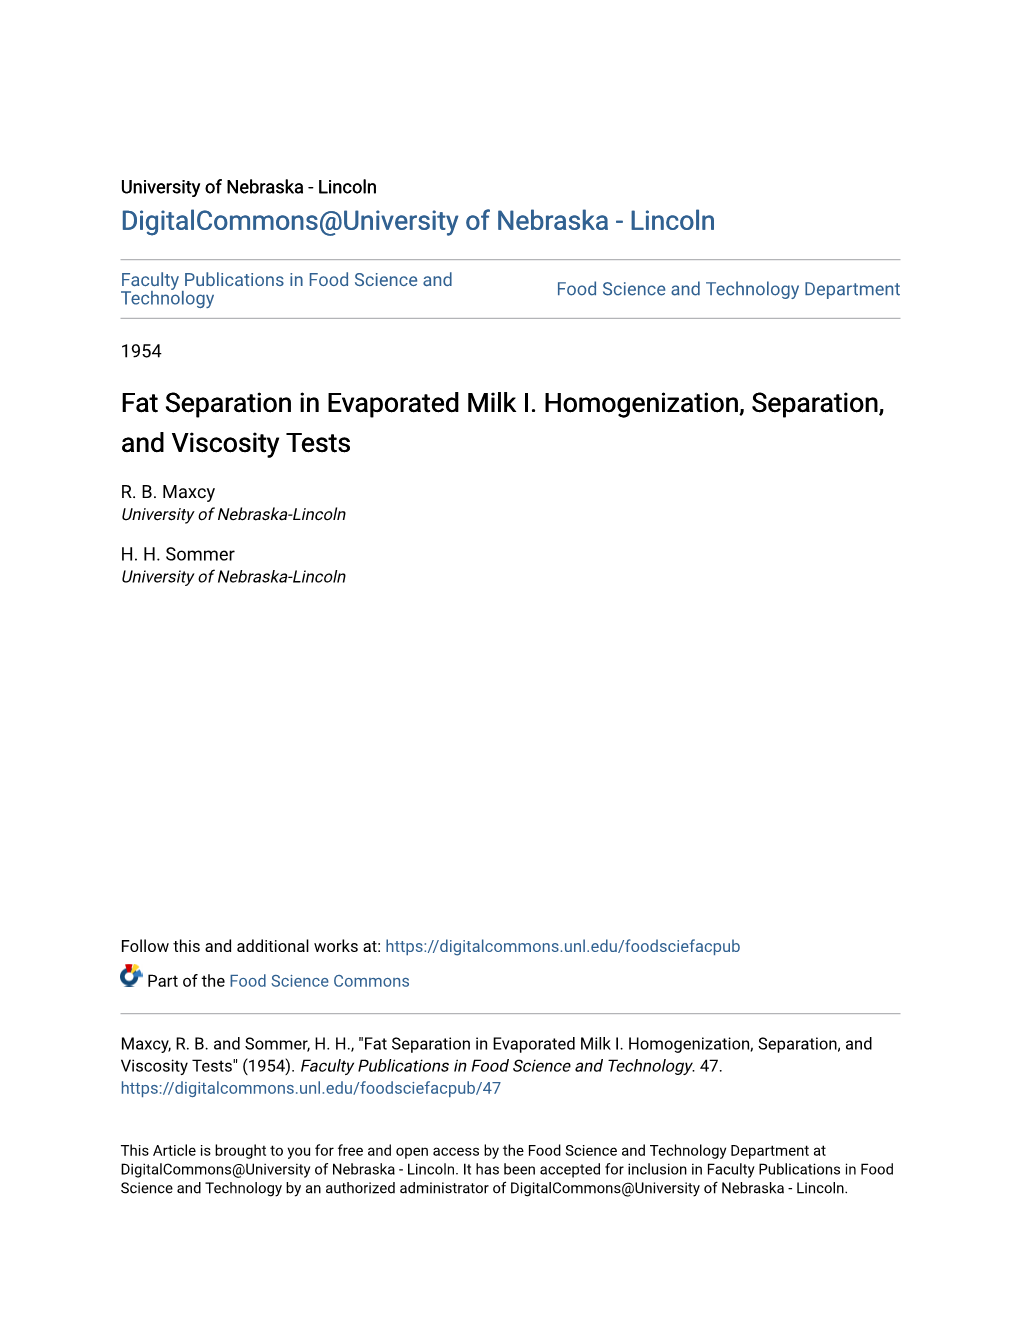 Fat Separation in Evaporated Milk I. Homogenization, Separation, and Viscosity Tests